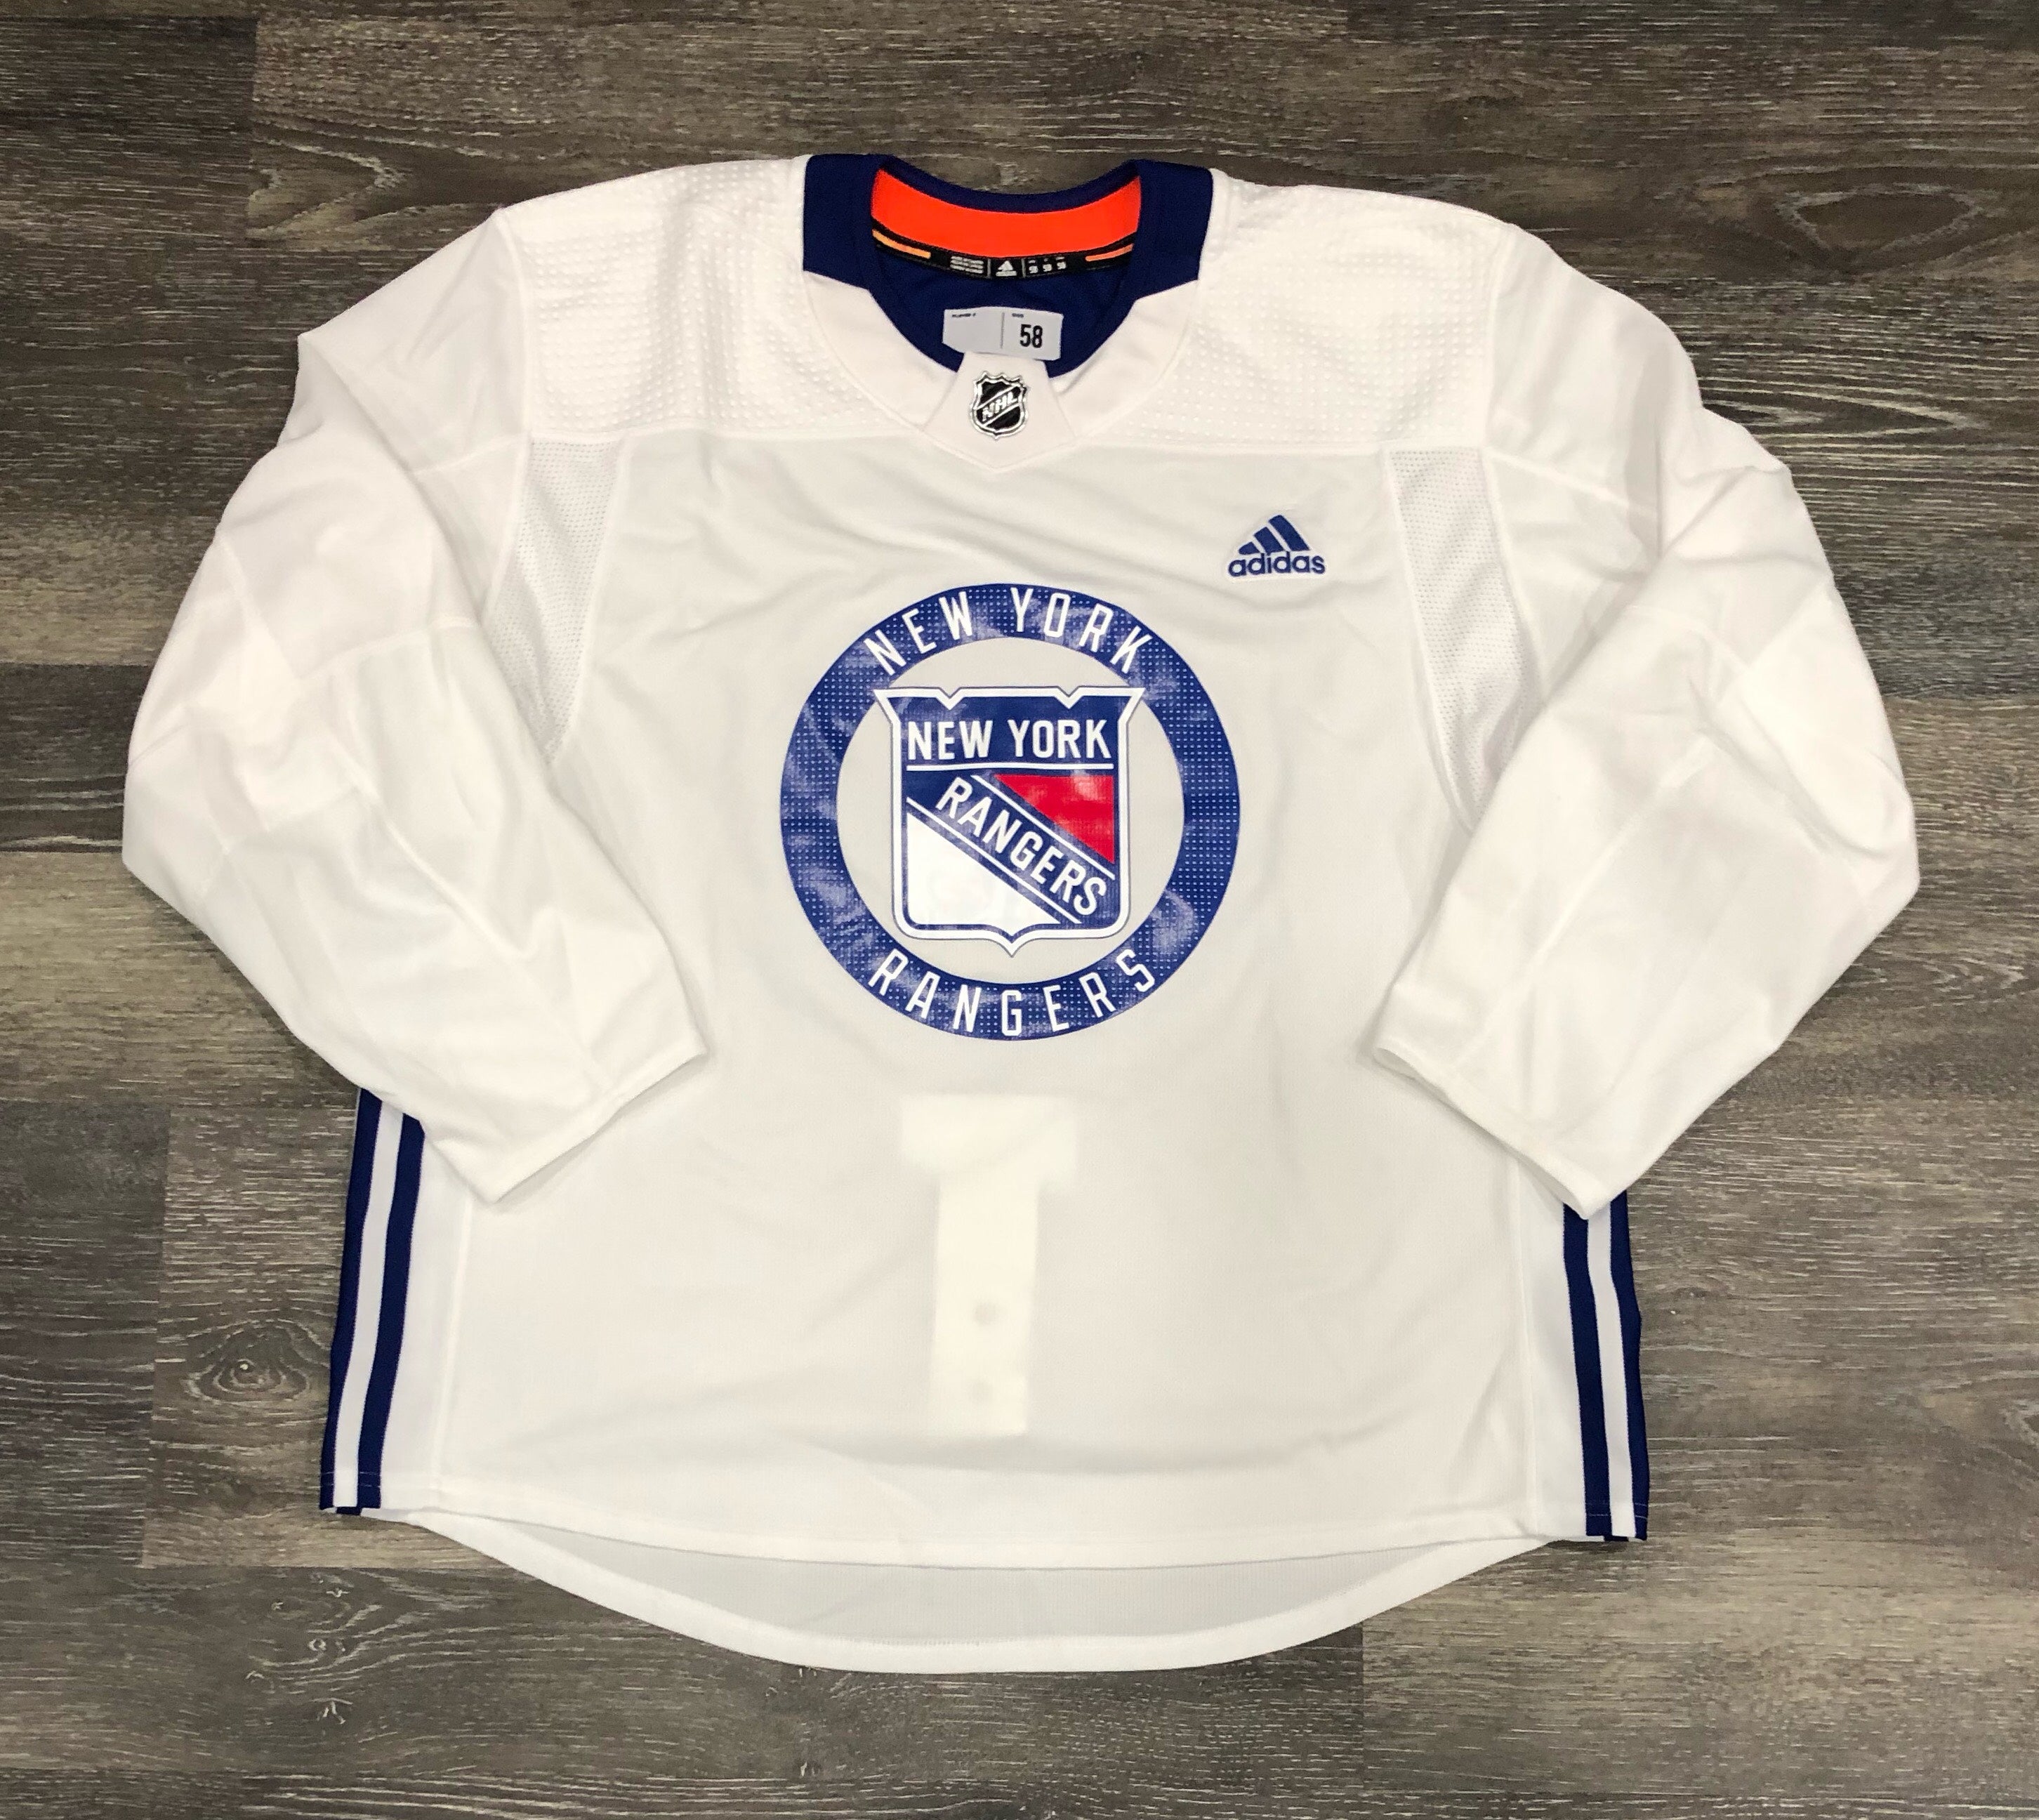 Baby New York Rangers Gear, Toddler, Rangers Newborn Golf Clothing